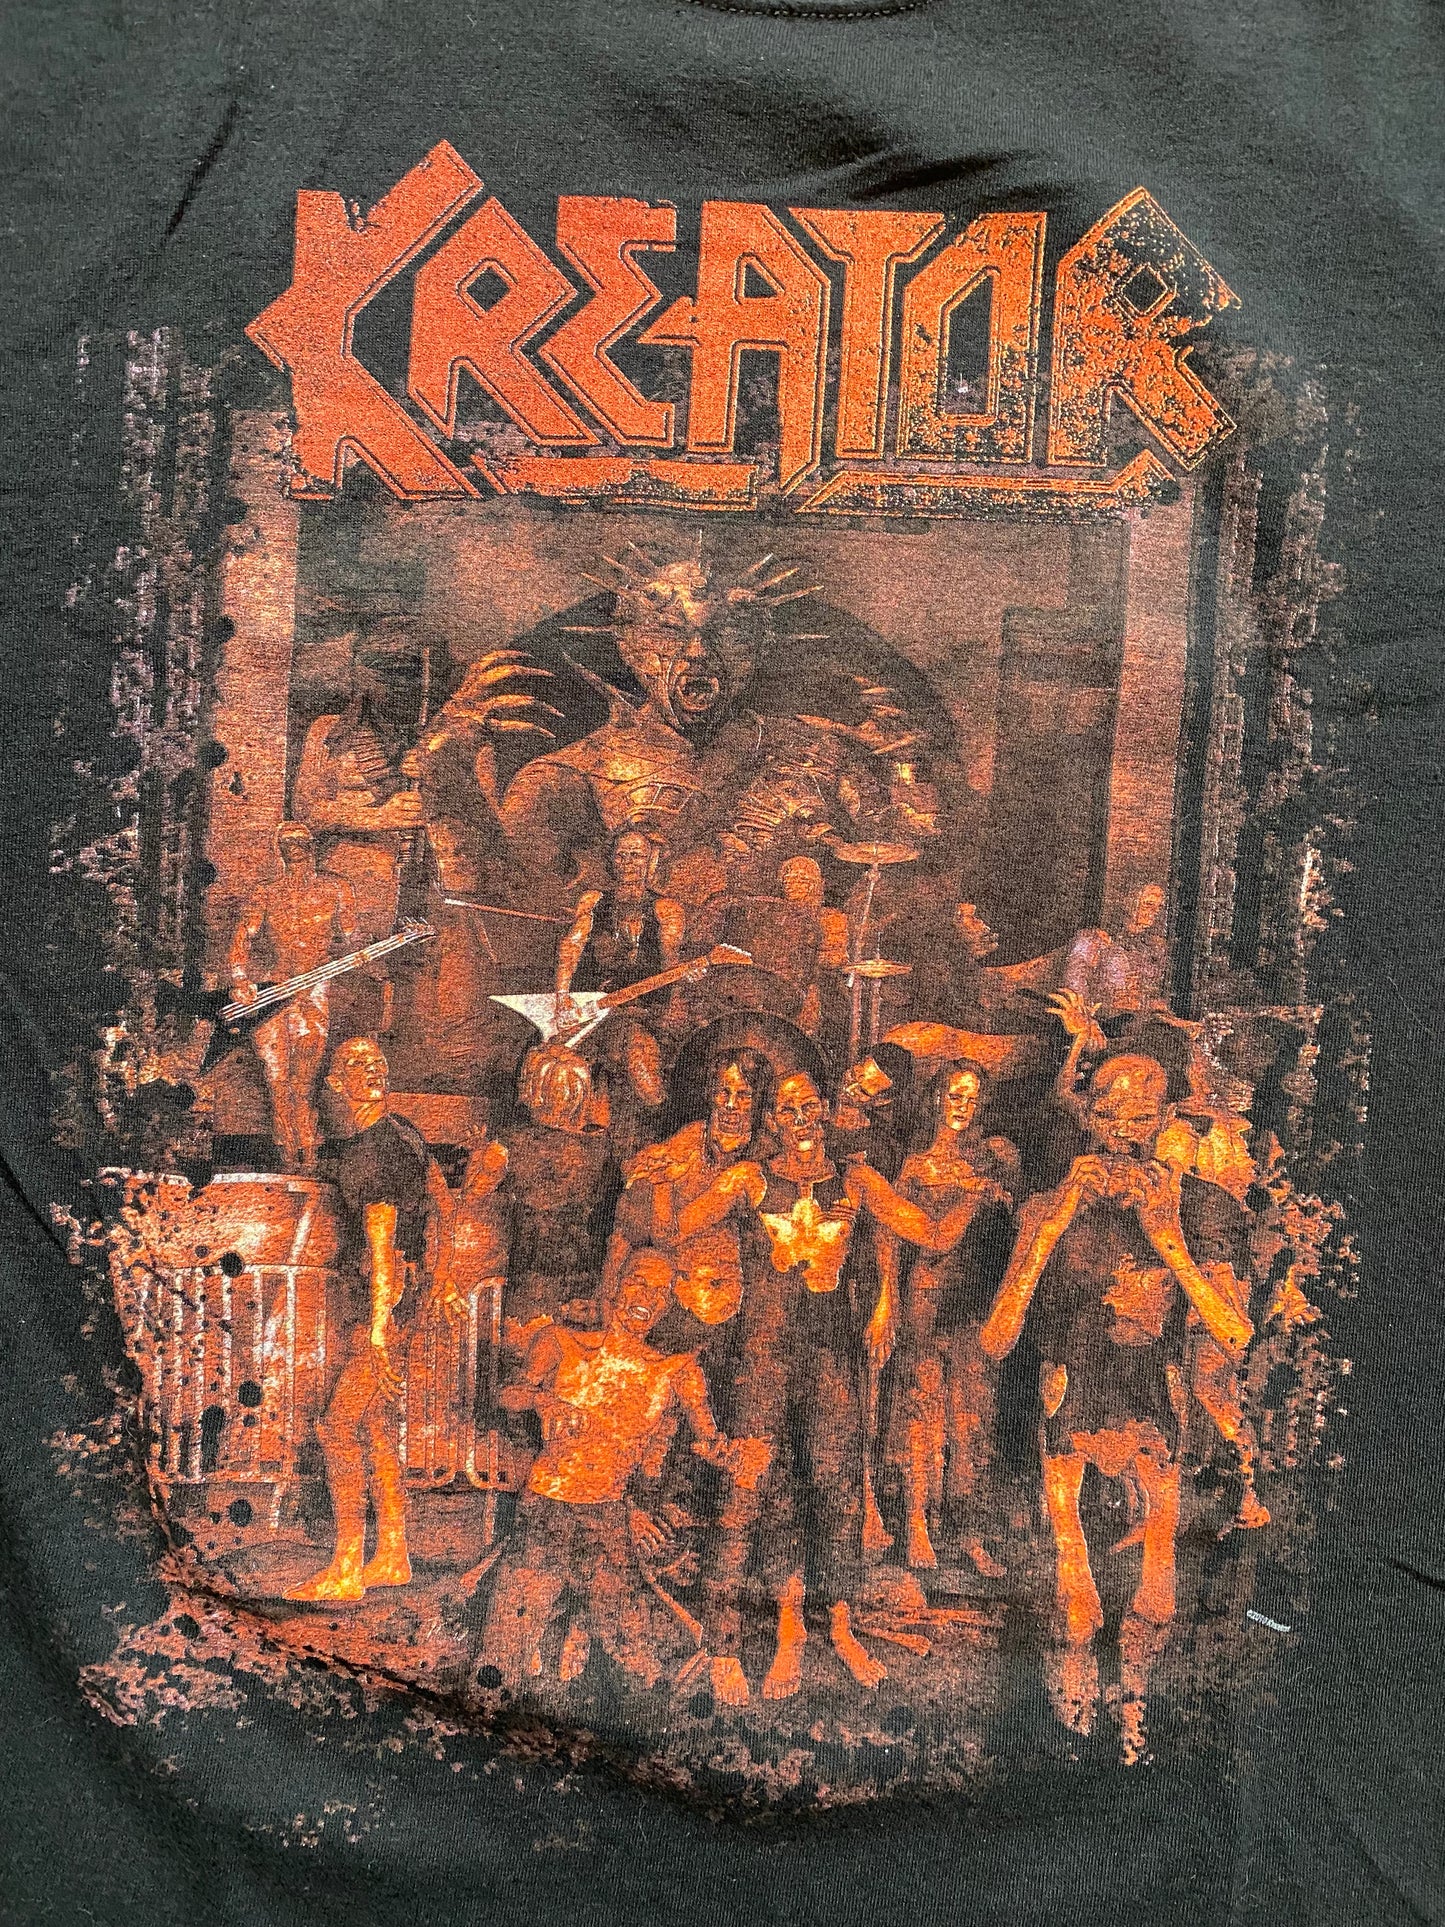 Kreator “Hordes of Chaos Part II” 2010 Tour Shirt